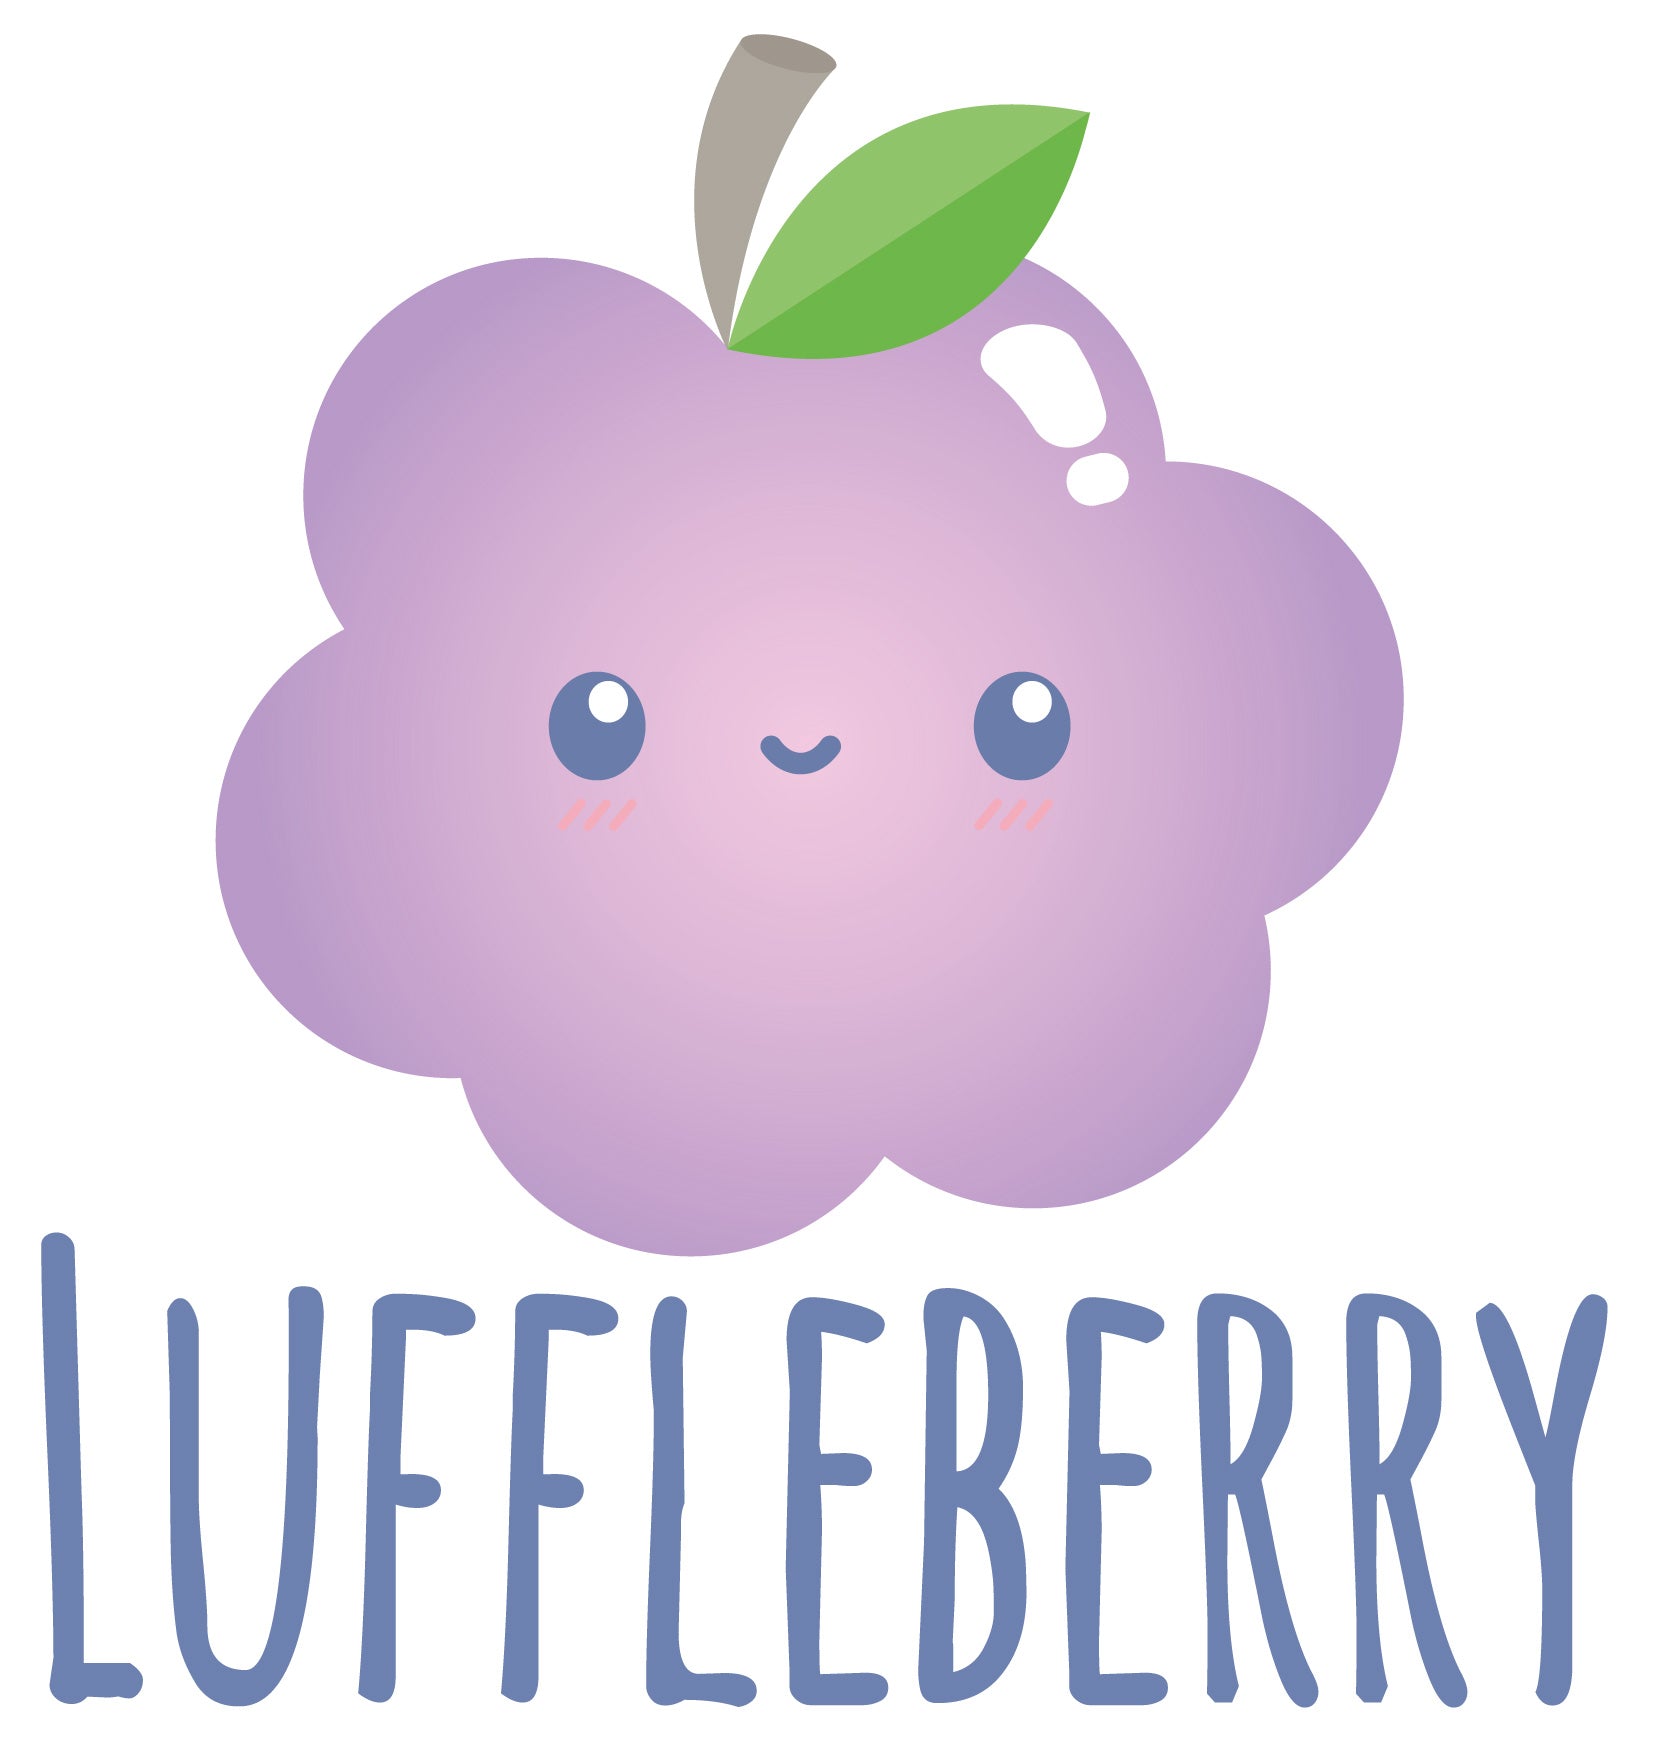 Luffleberry